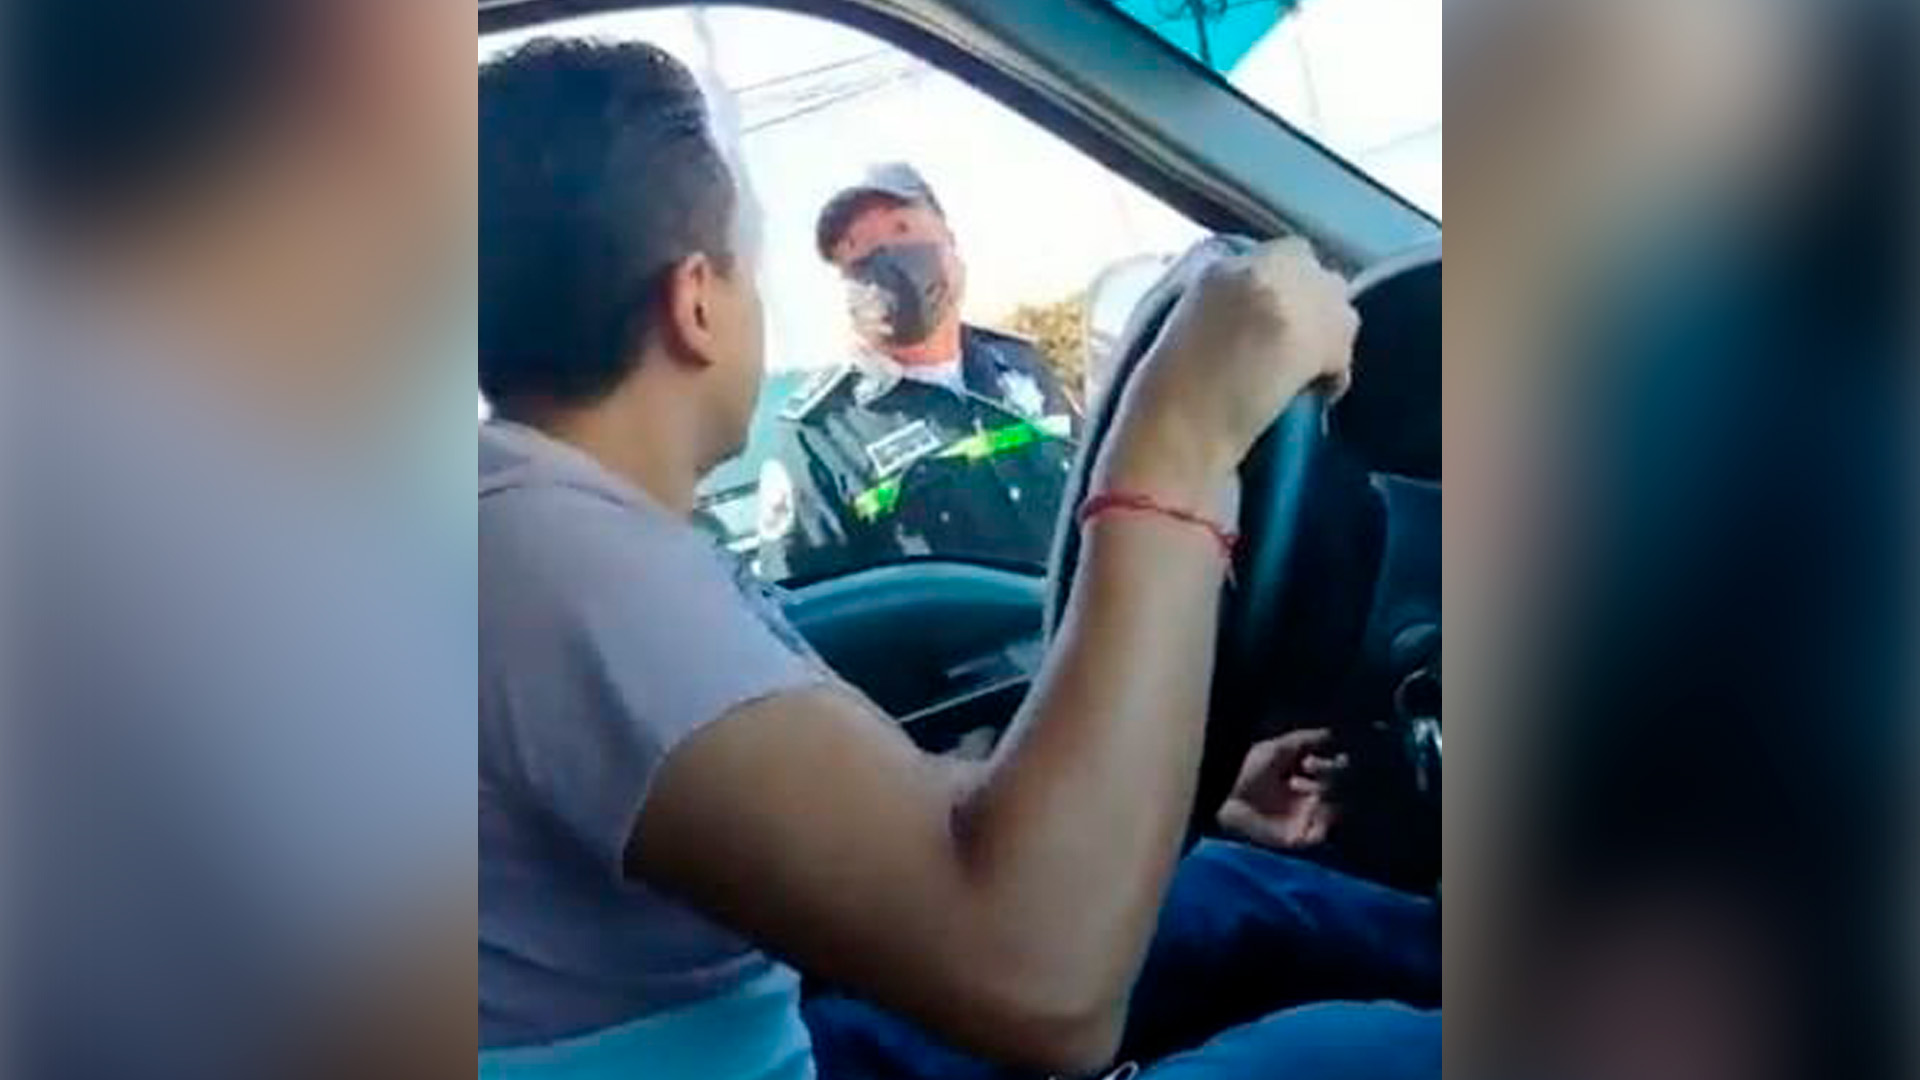 The Cuautitlán Izcalli policeman threatened a motorist for not admitting an alleged infraction (Screenshot: Twitter/@MrElDiablo8)